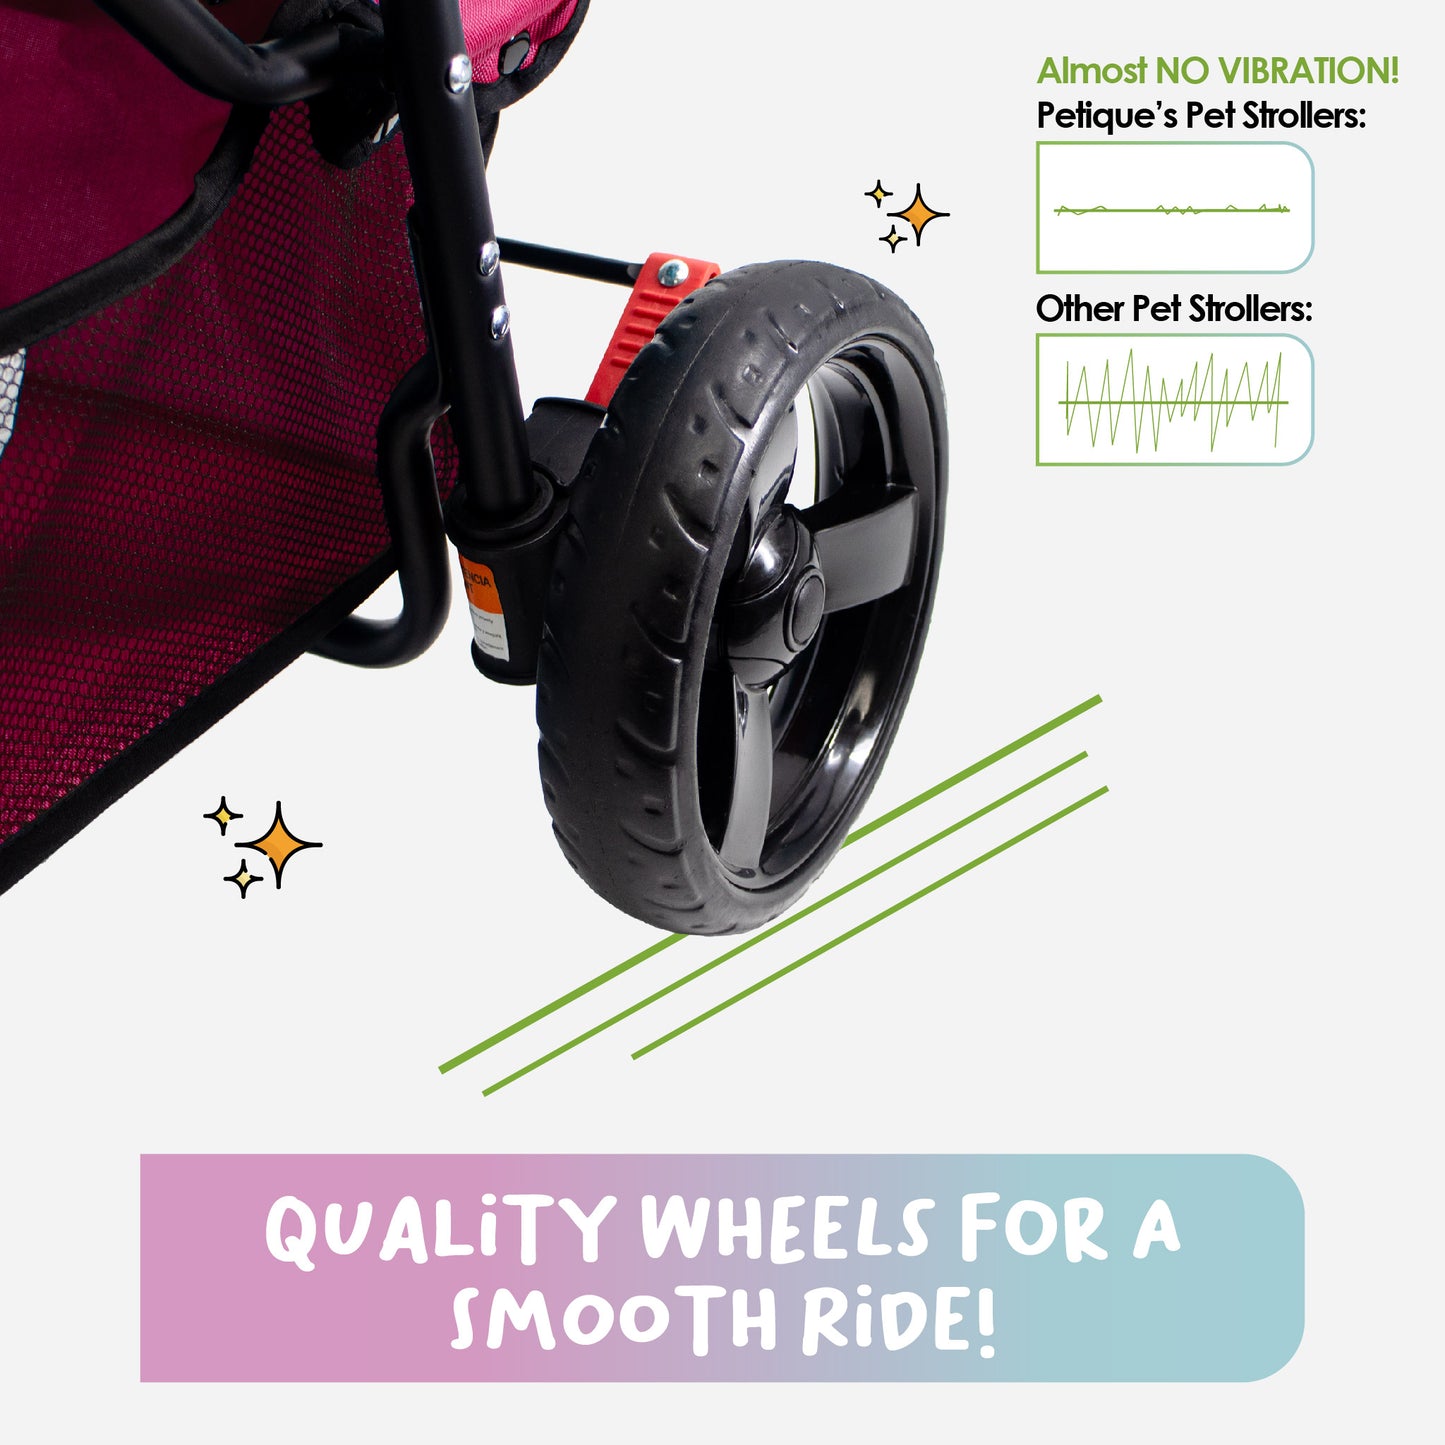 durable pet stroller smooth ride